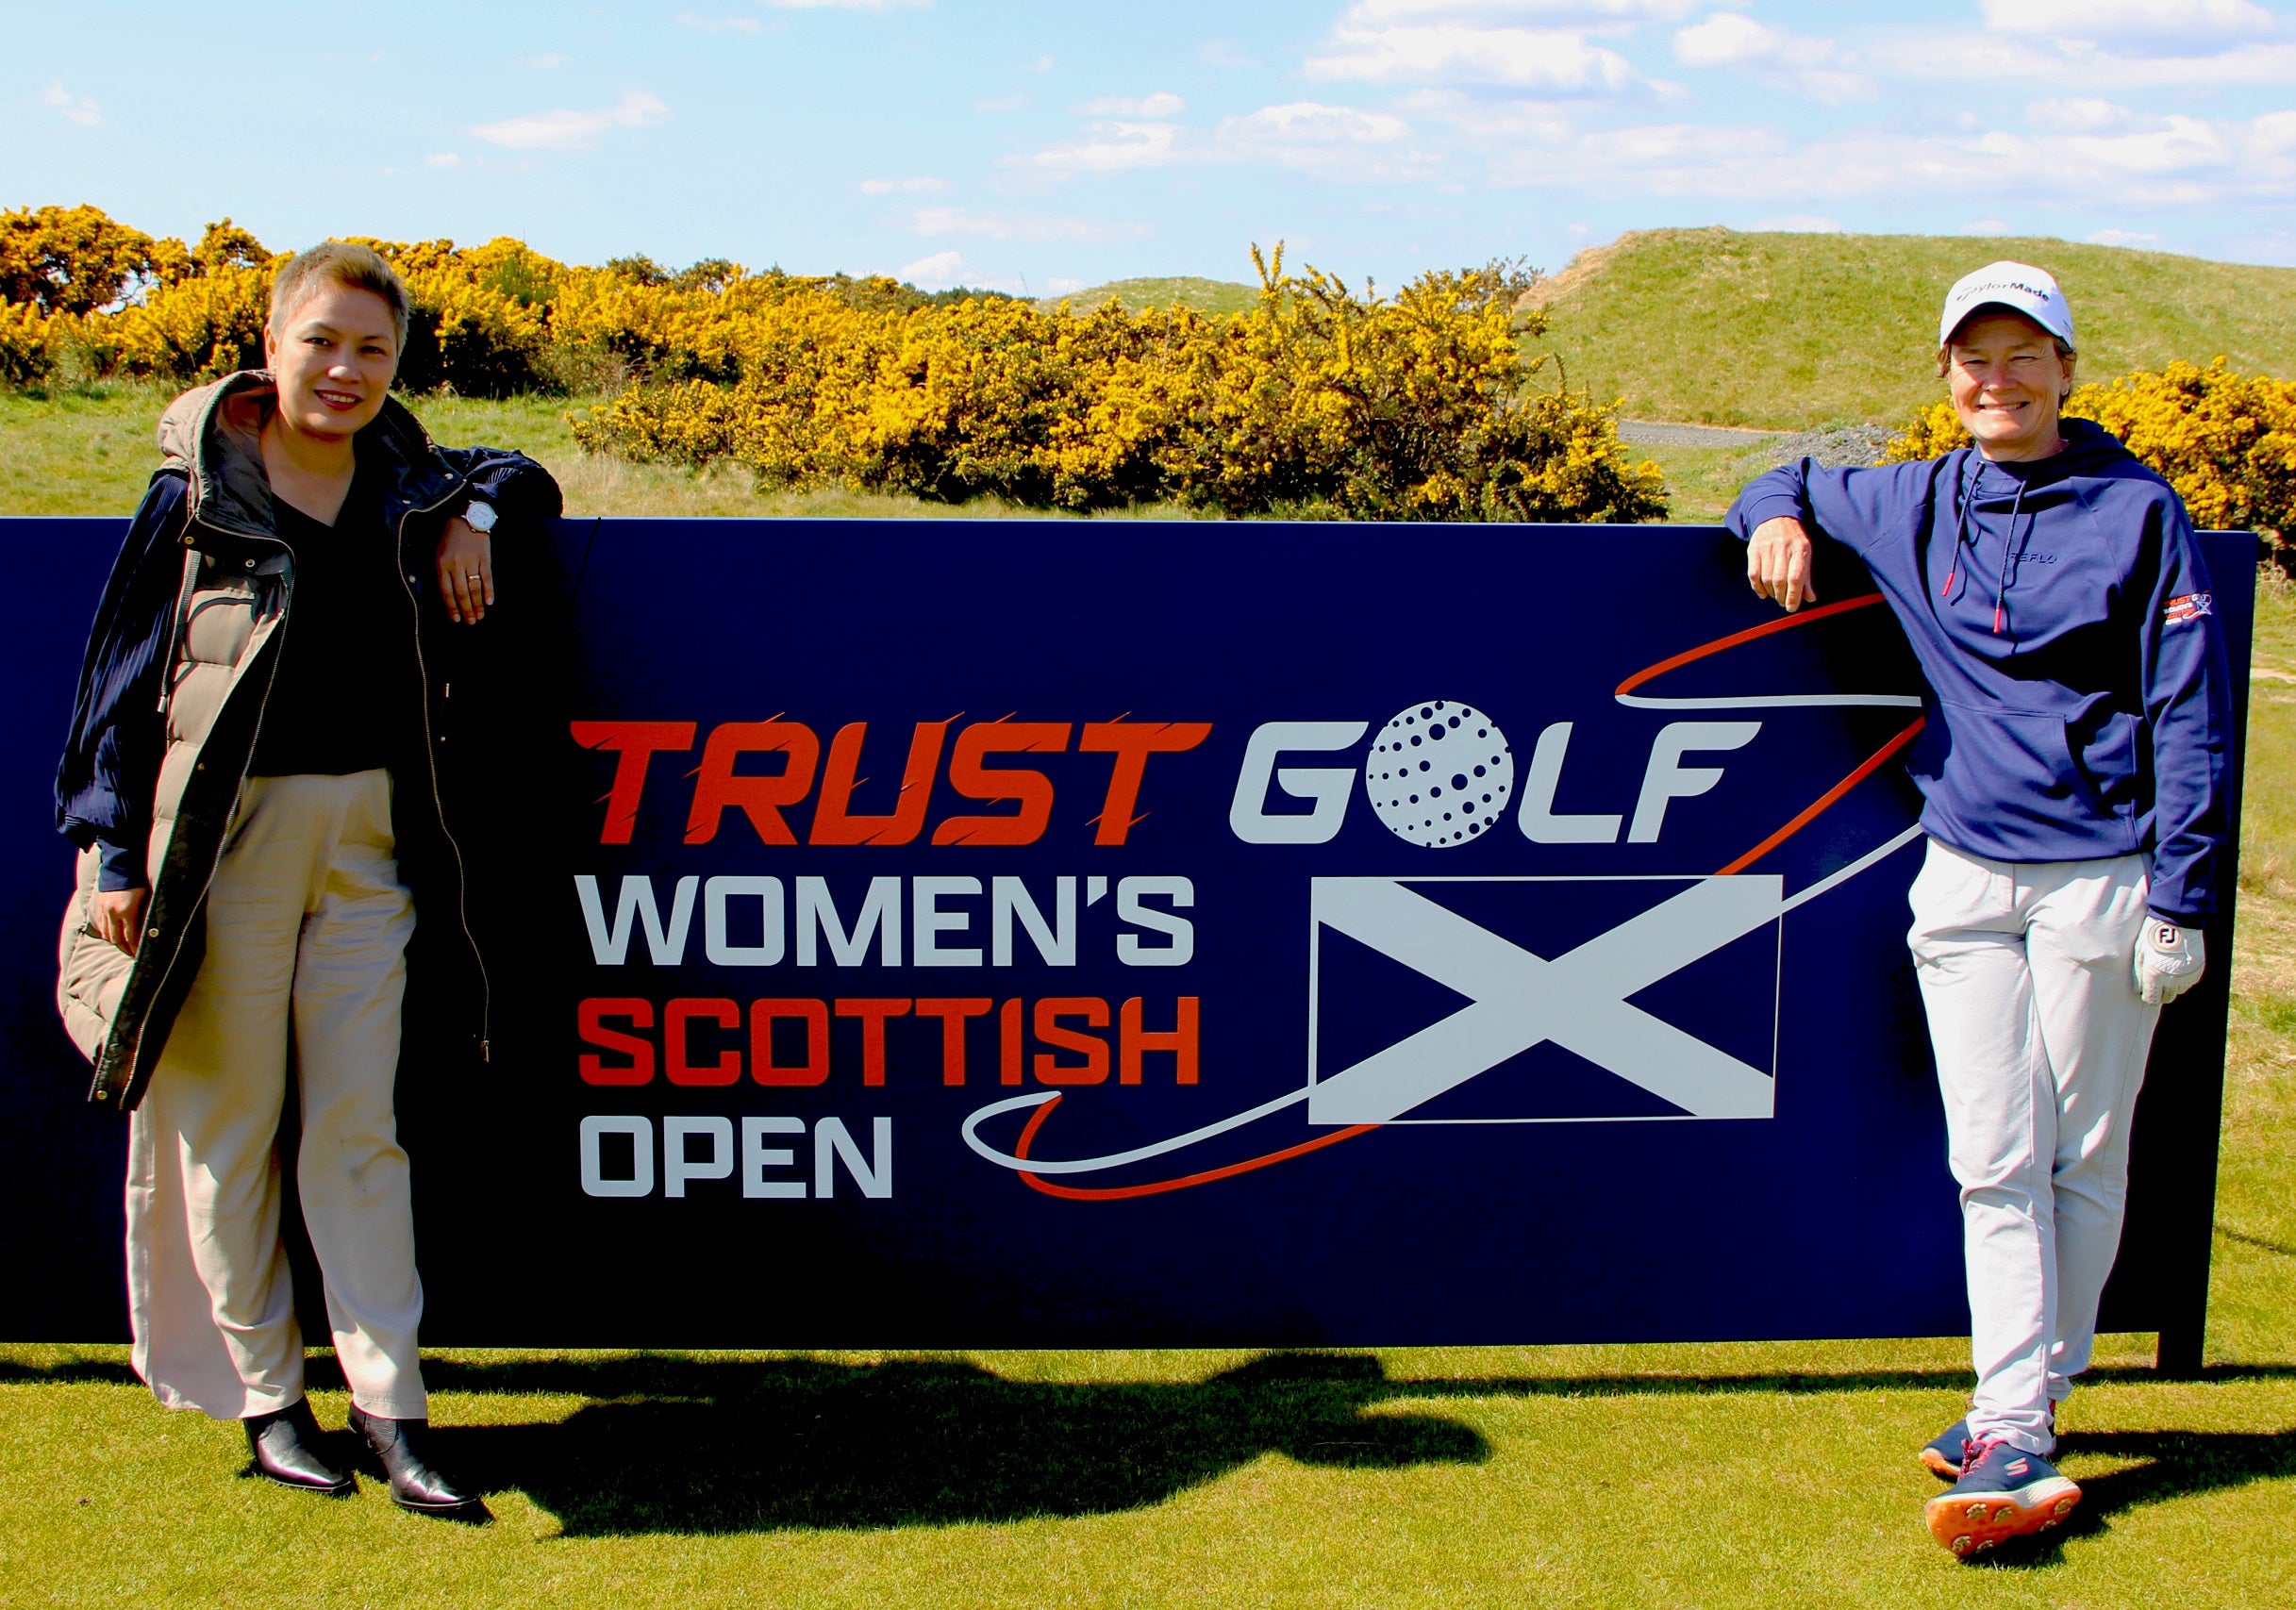 Reflo Named as Official Apparel Partner of the 2022 Trust Golf Women’s Scottish Open